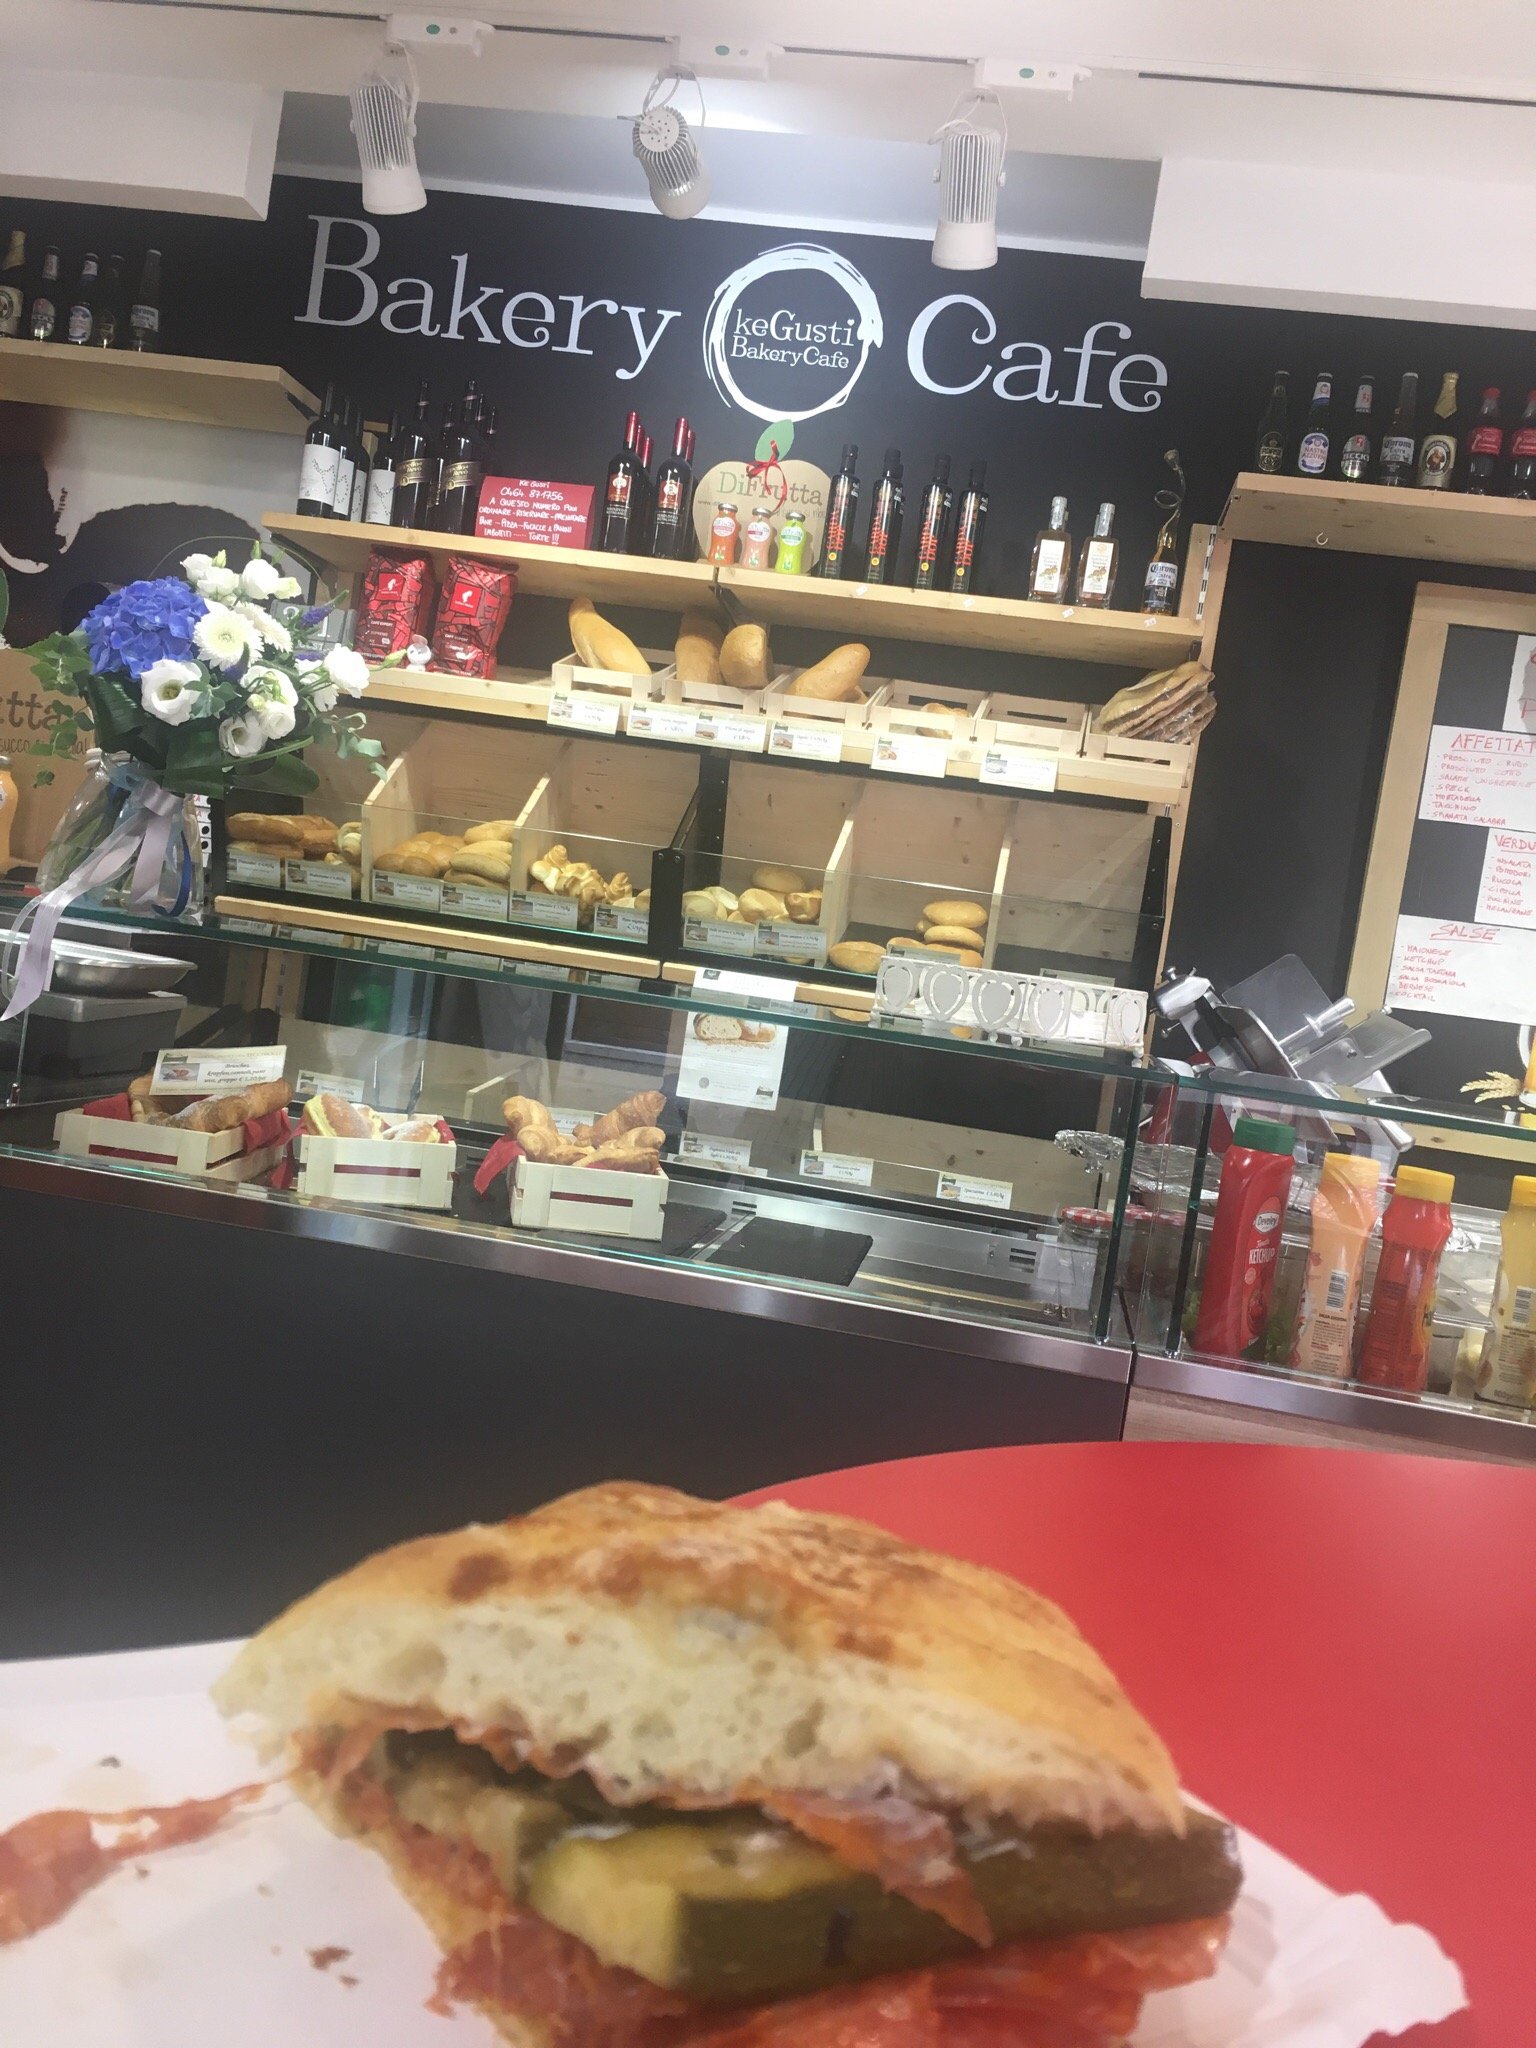 Kegusti Bakery Cafe, Riva Del Garda